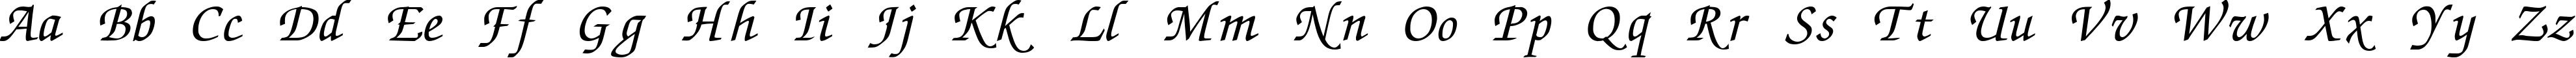 Пример написания английского алфавита шрифтом Zapf Chancery Italic:001.007